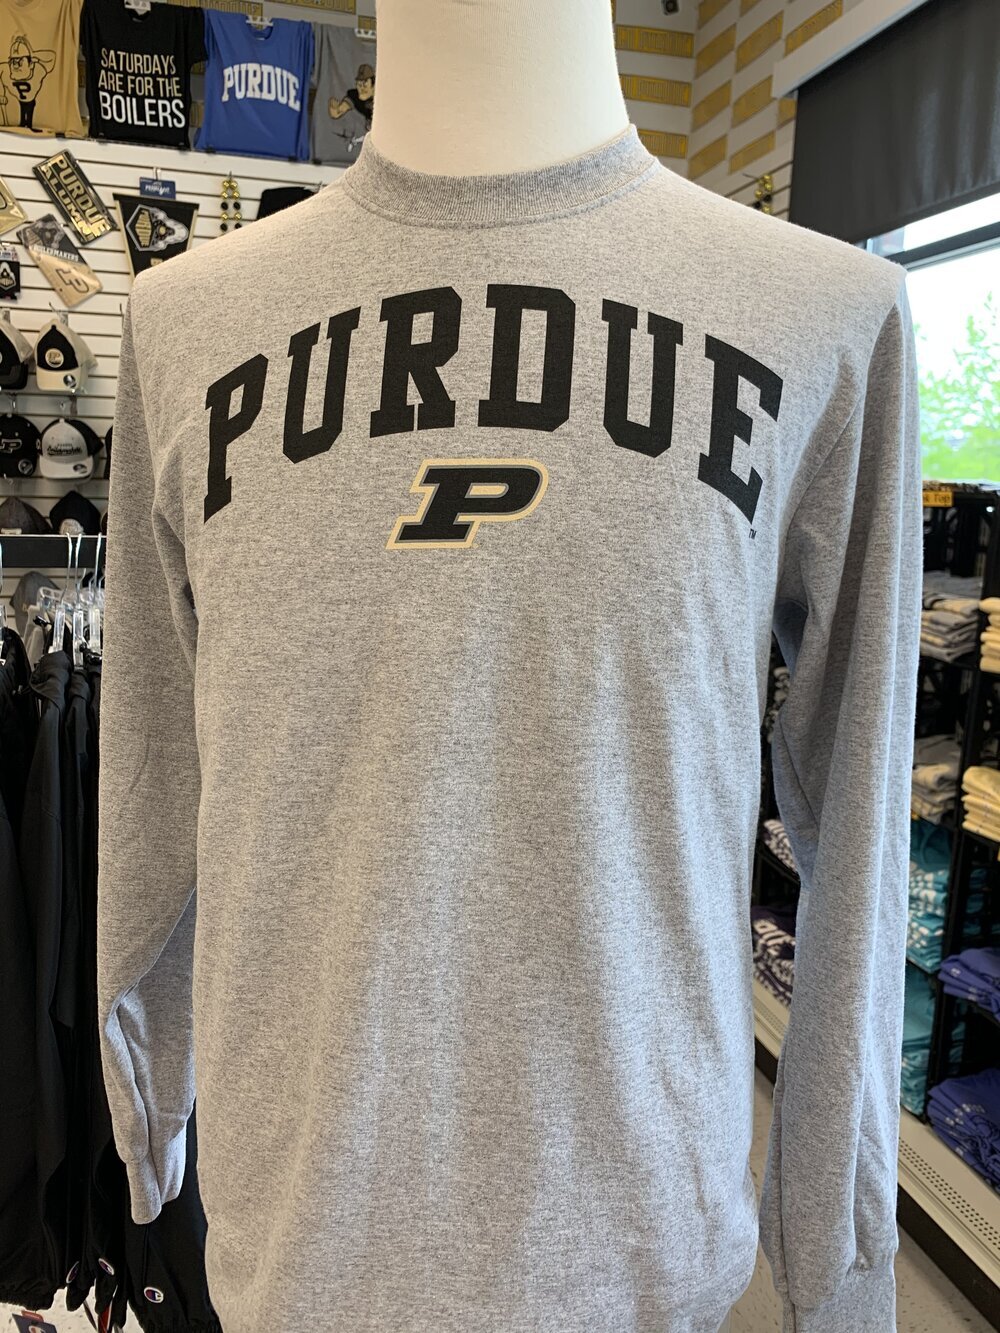 Discount Den — Purdue Alumni T Shirt